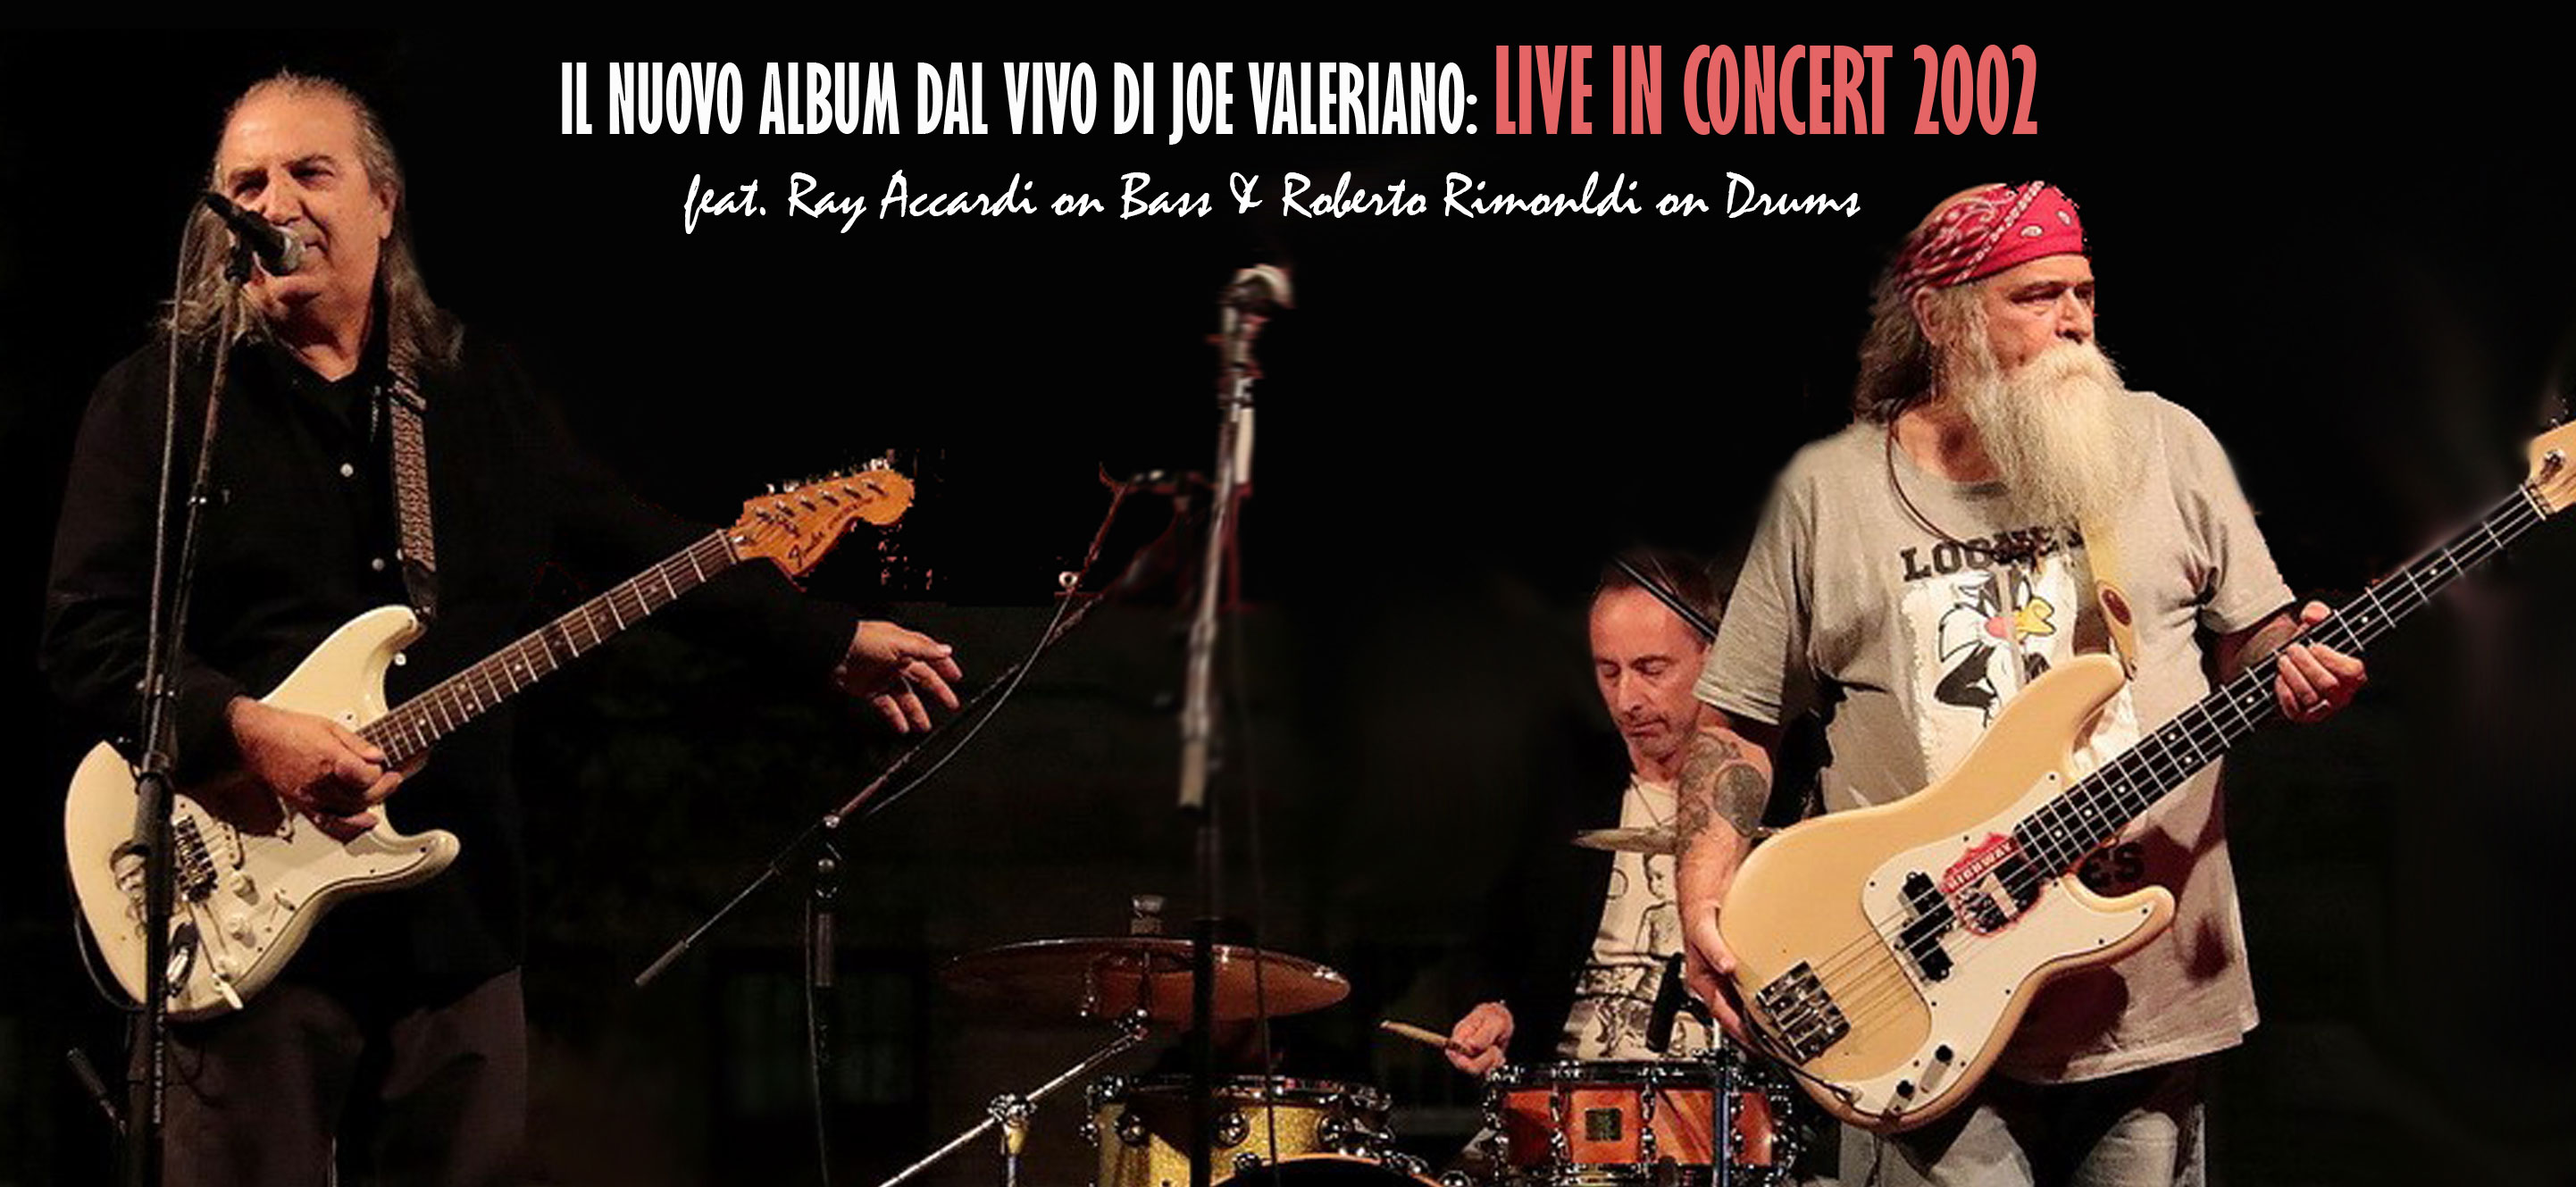 Joe Valeriano Band - "Live in Concert 2002"